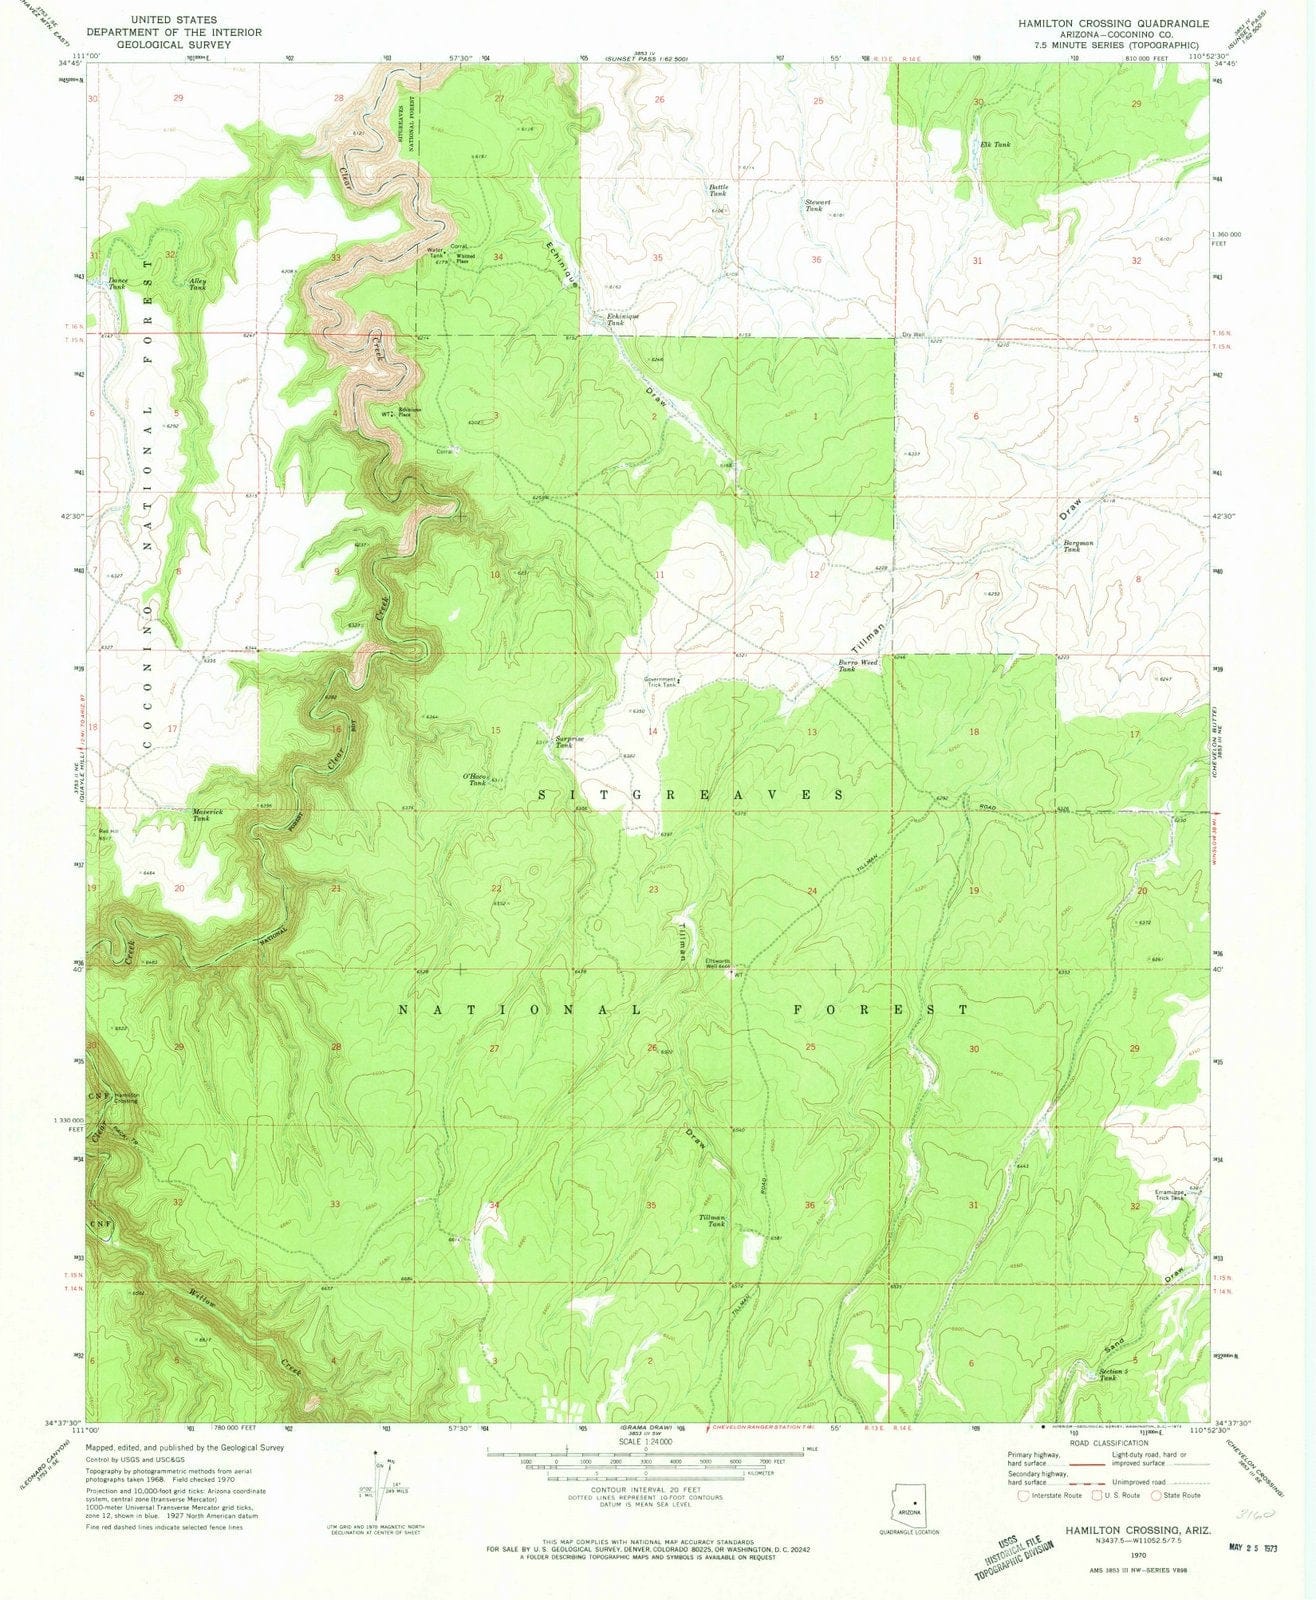 1970 Hamilton Crossing, AZ - Arizona - USGS Topographic Map